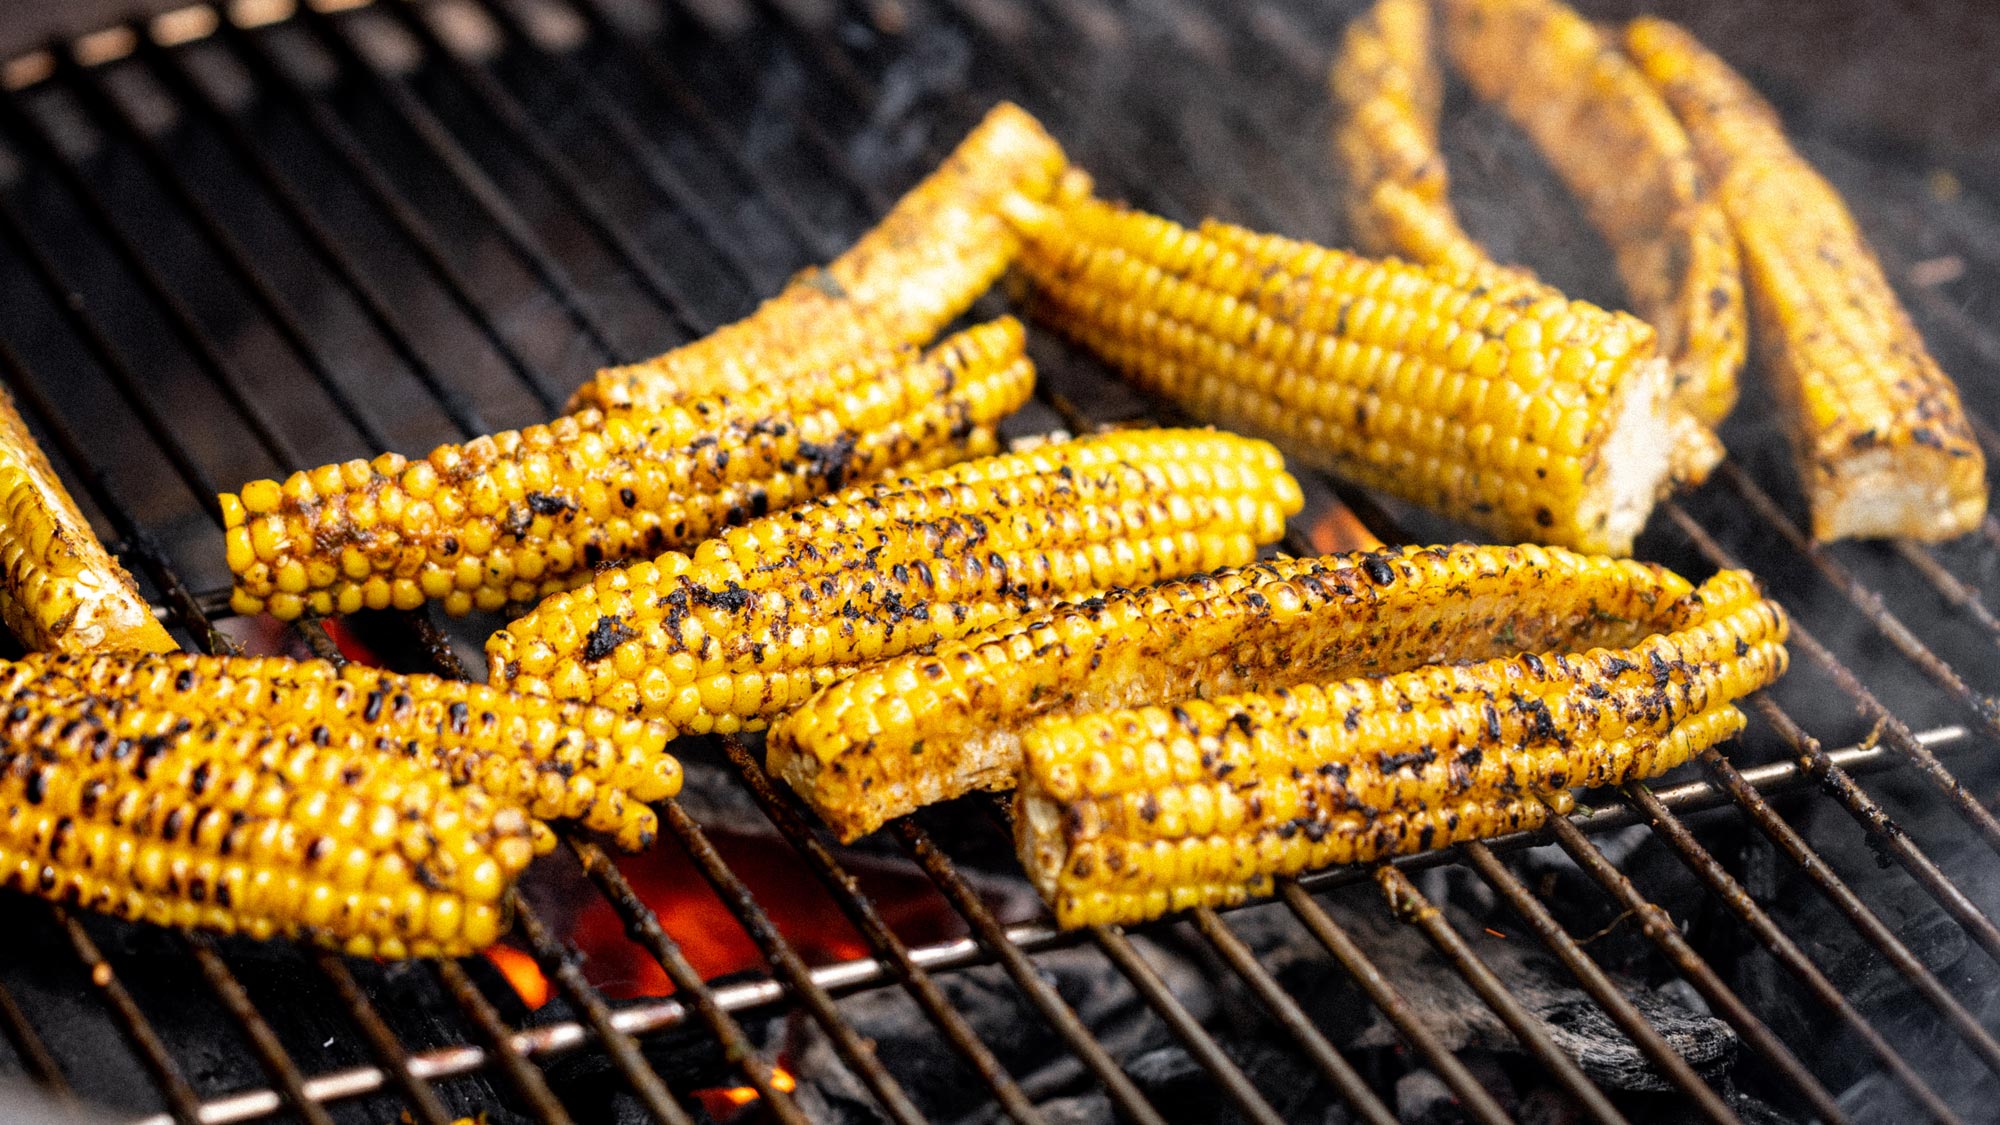 grill the corn ribs